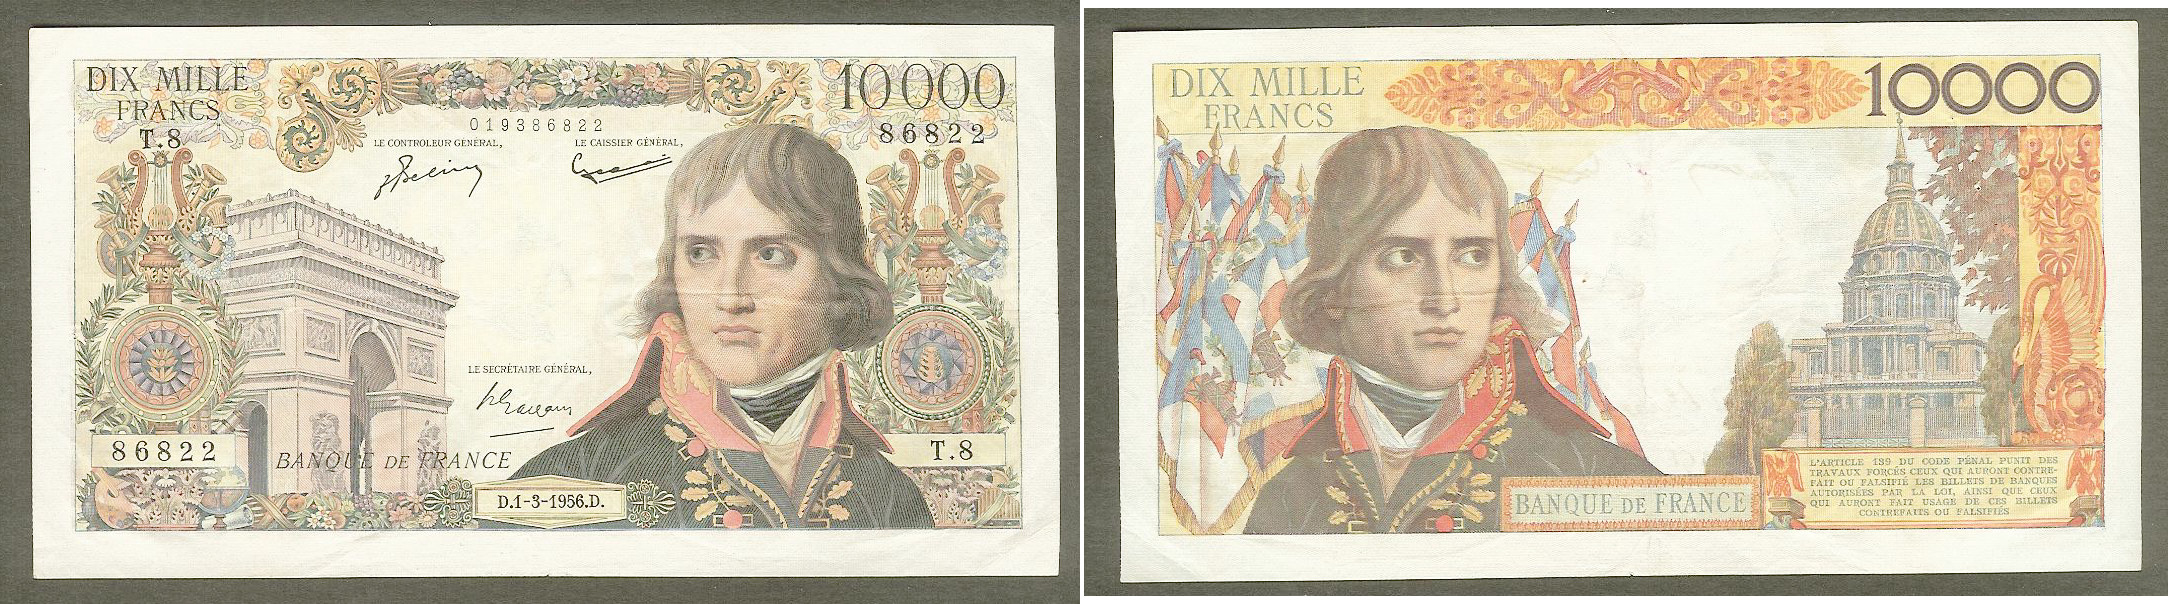 10000 Francs BONAPARTE FRANCE 1.3.1956 TTB+